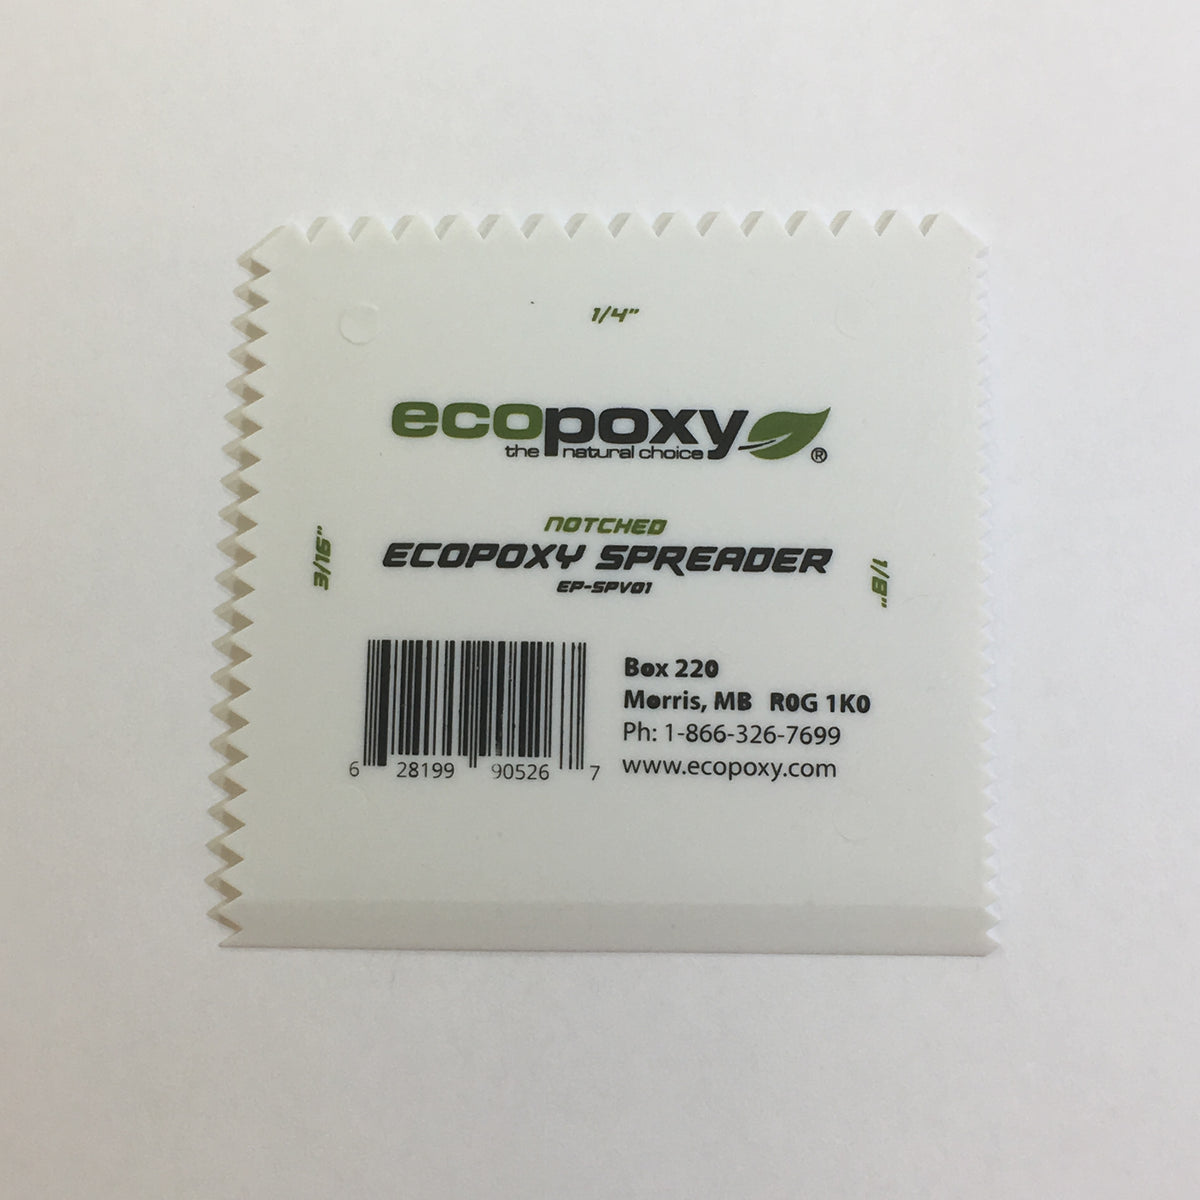 Ecopoxy V-Notched Spreader